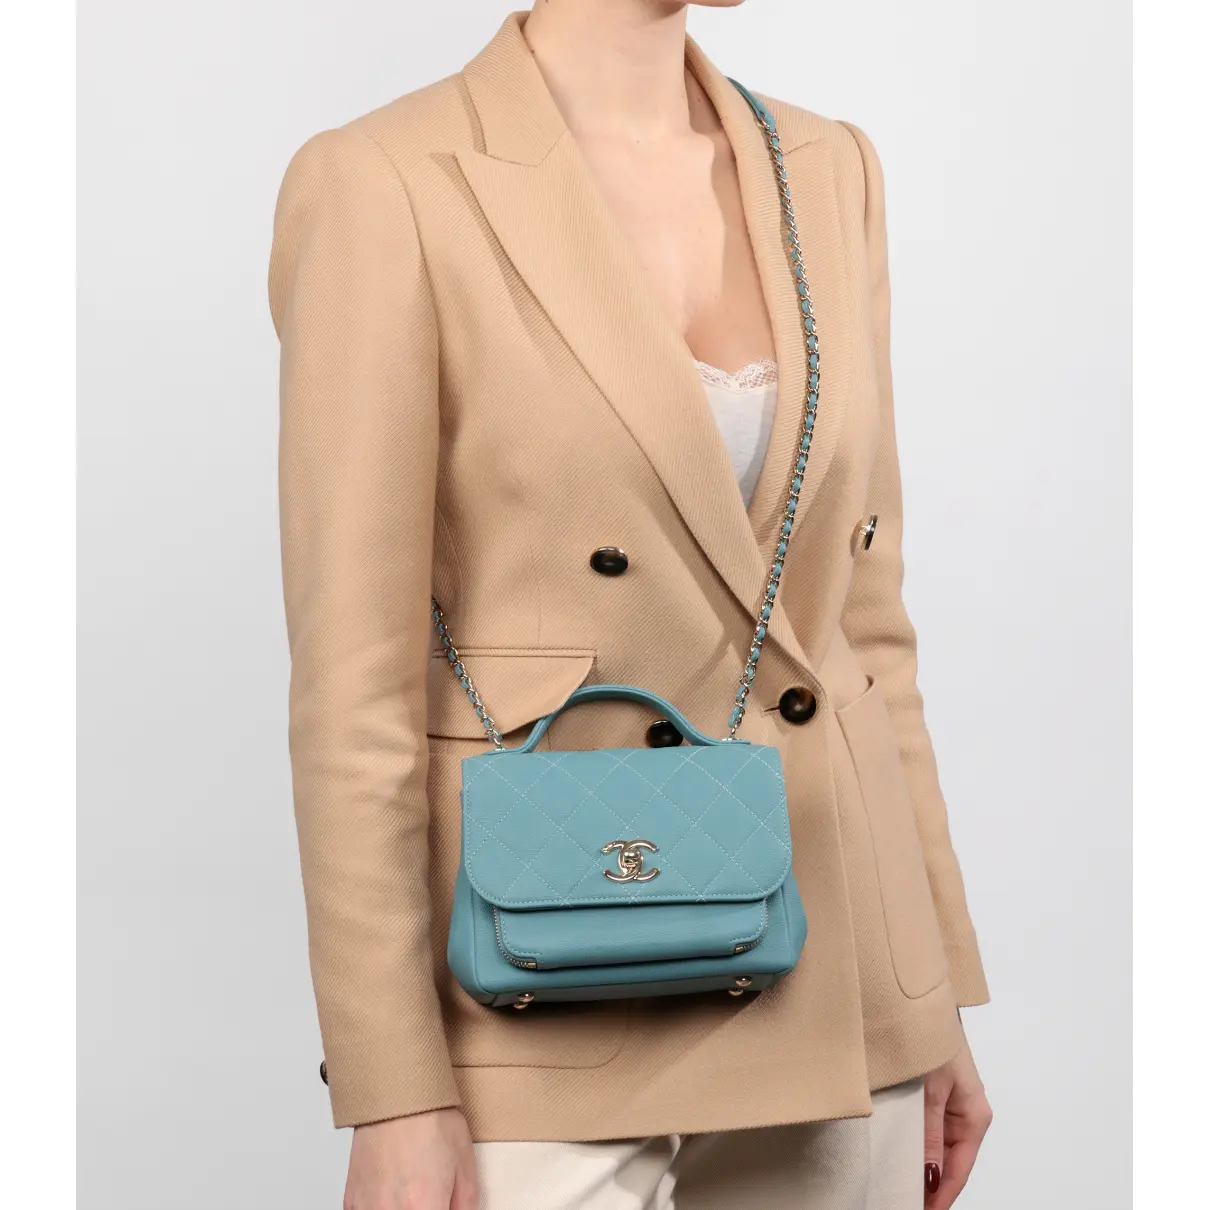 Buy Chanel Business Affinity leather crossbody bag online - Vintage